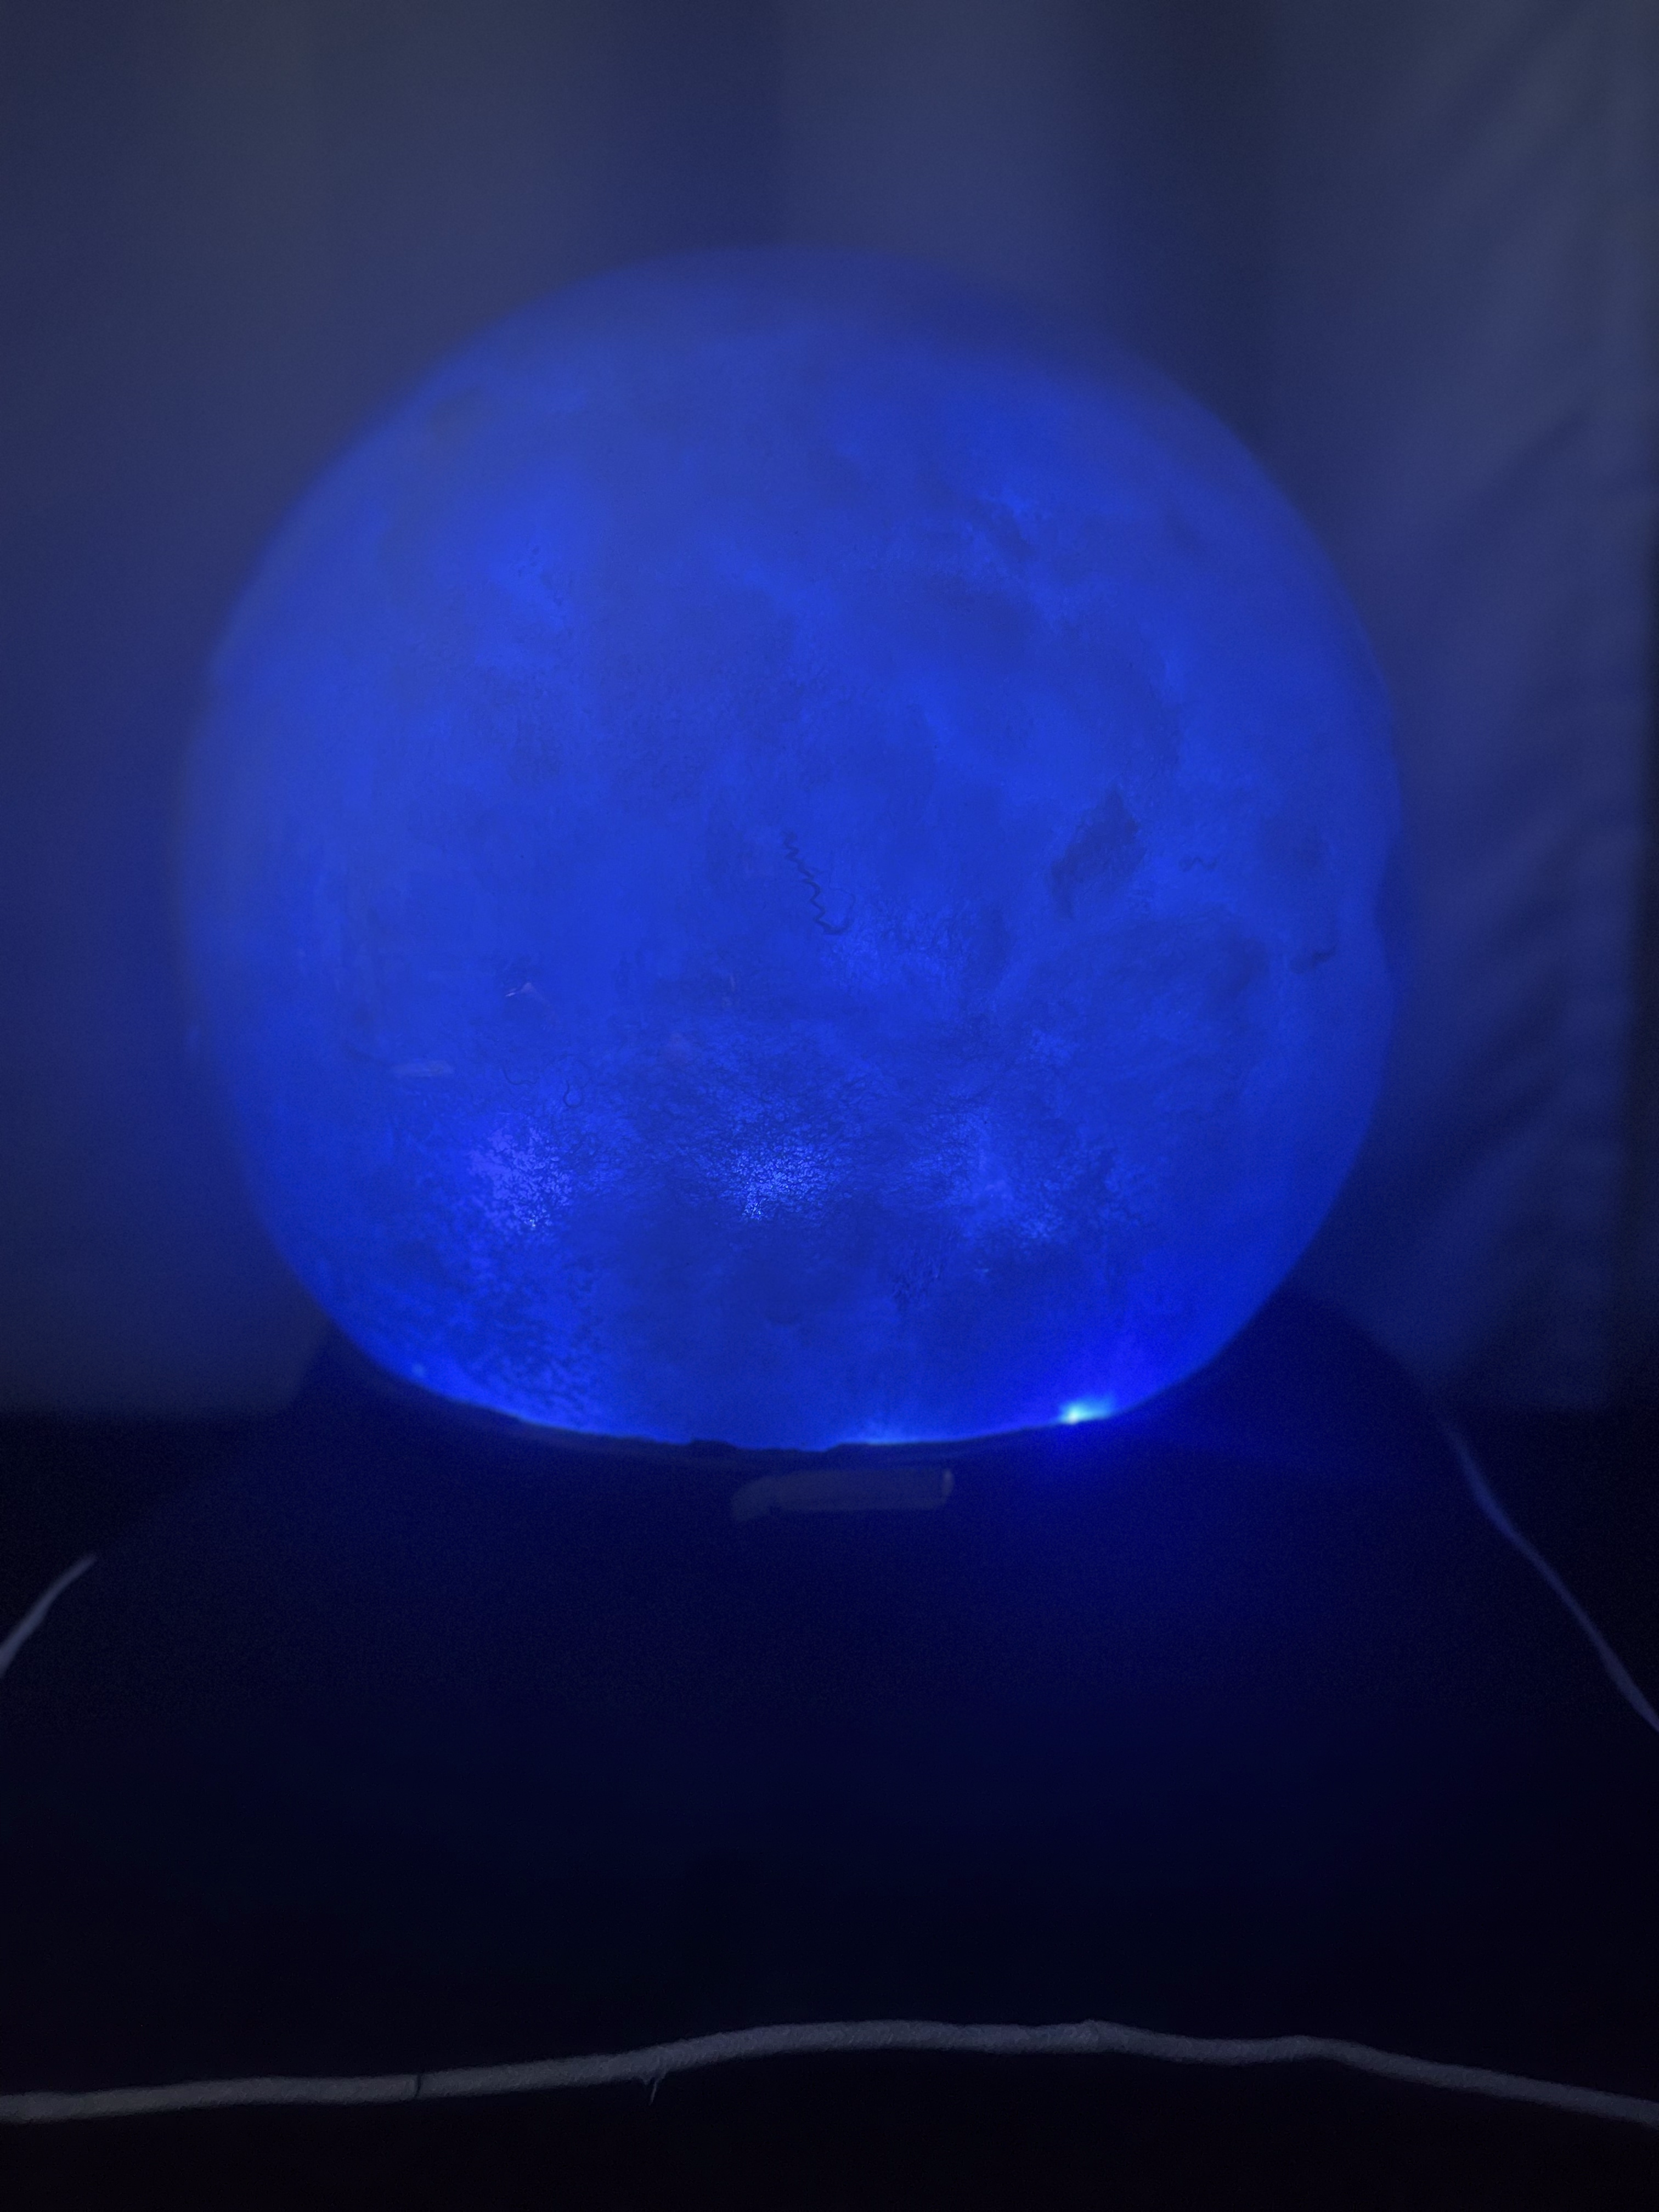 Blue lit up mysterio helmet